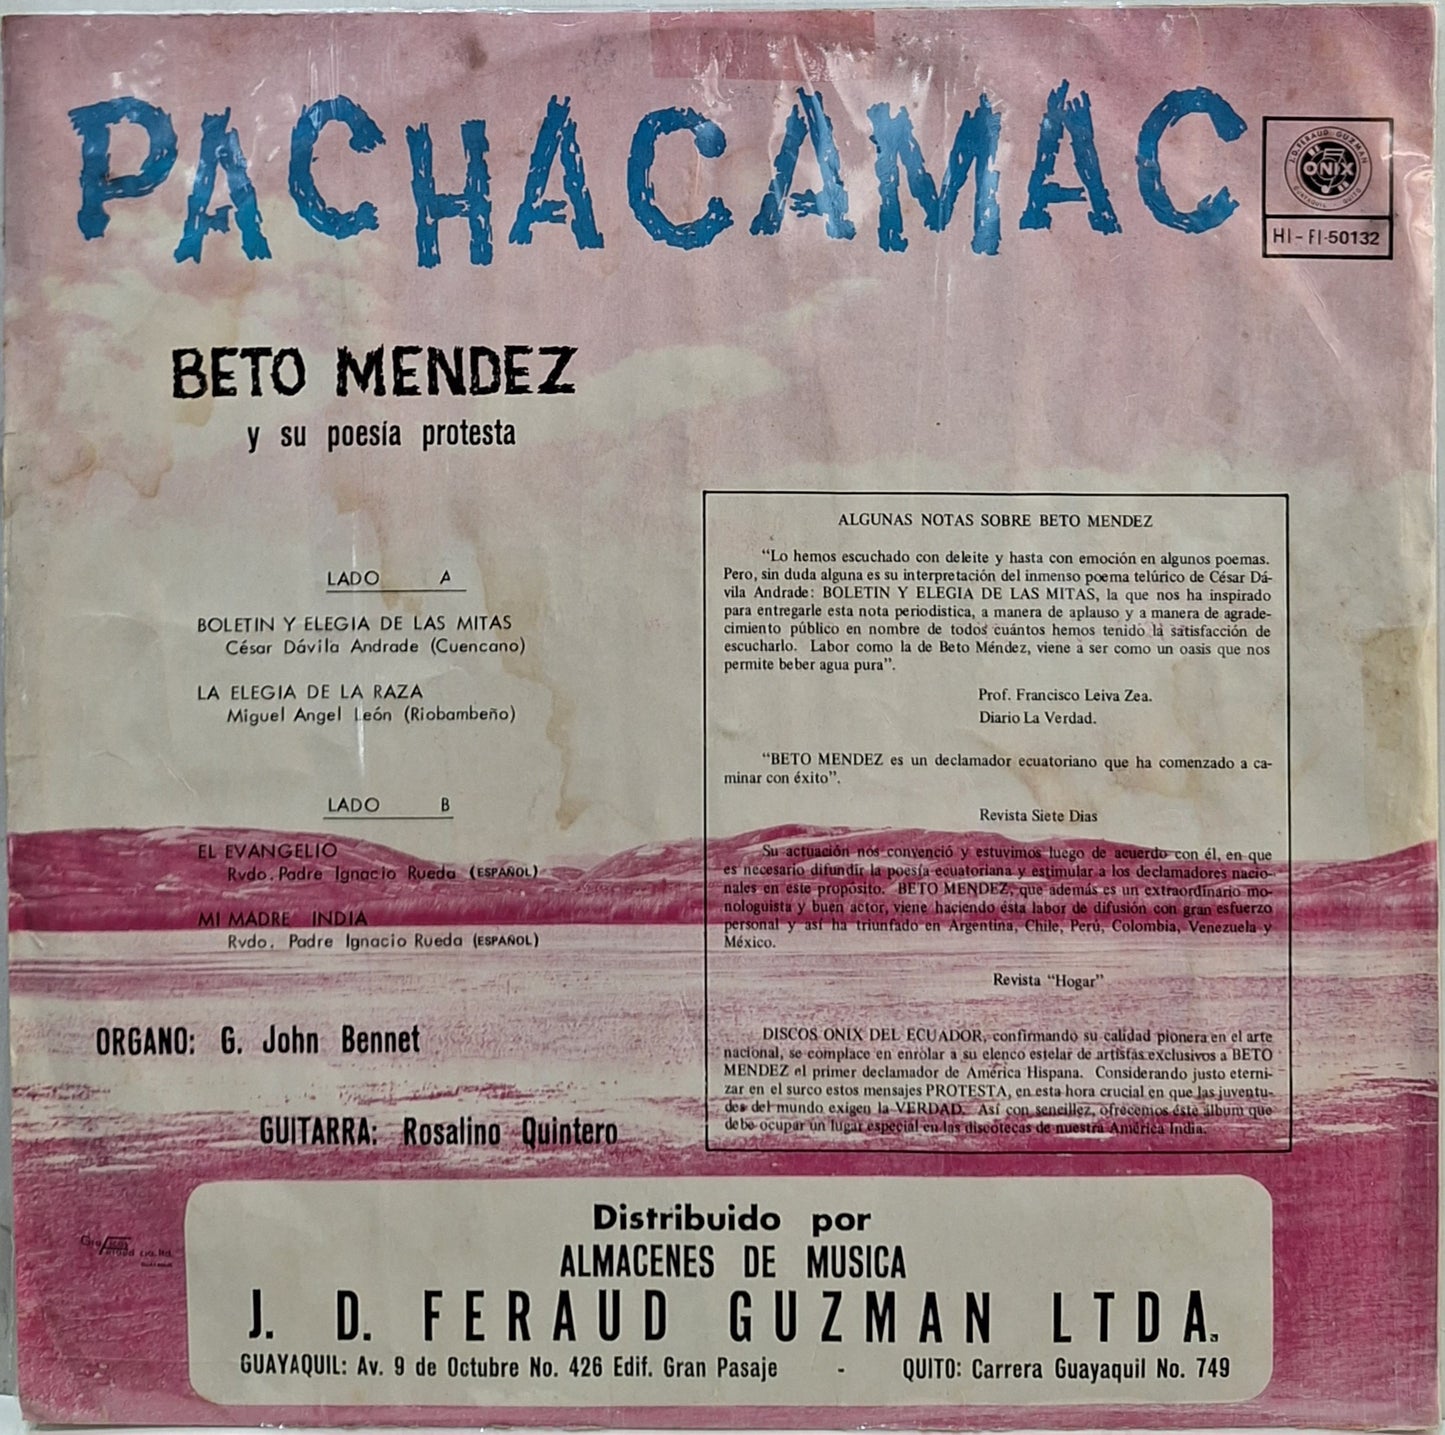 BETO MENDEZ - PACHACAMAC LP